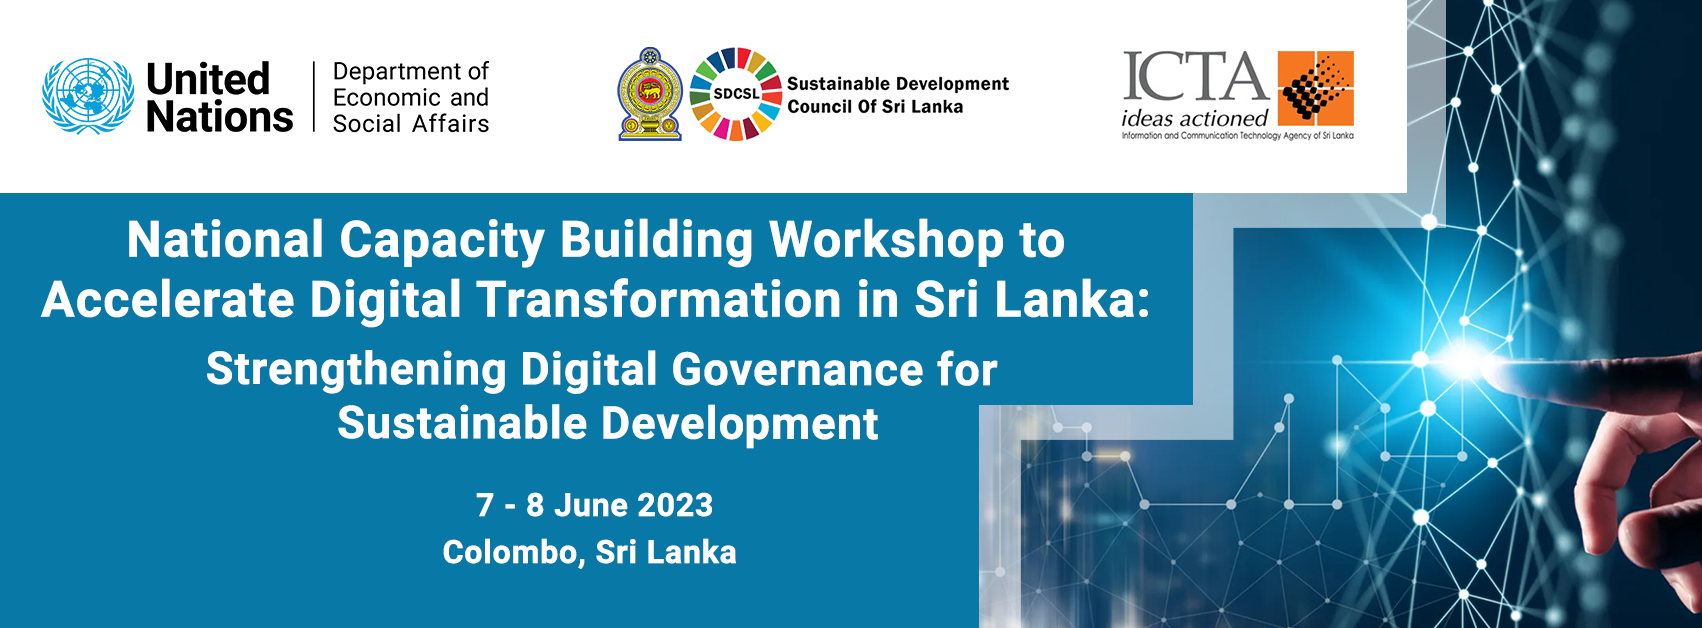 National Capacity Building Workshop on Accelerating Digital Government Transformation in Sri Lanka: Strengthening Digital Governance for Sustainable Development